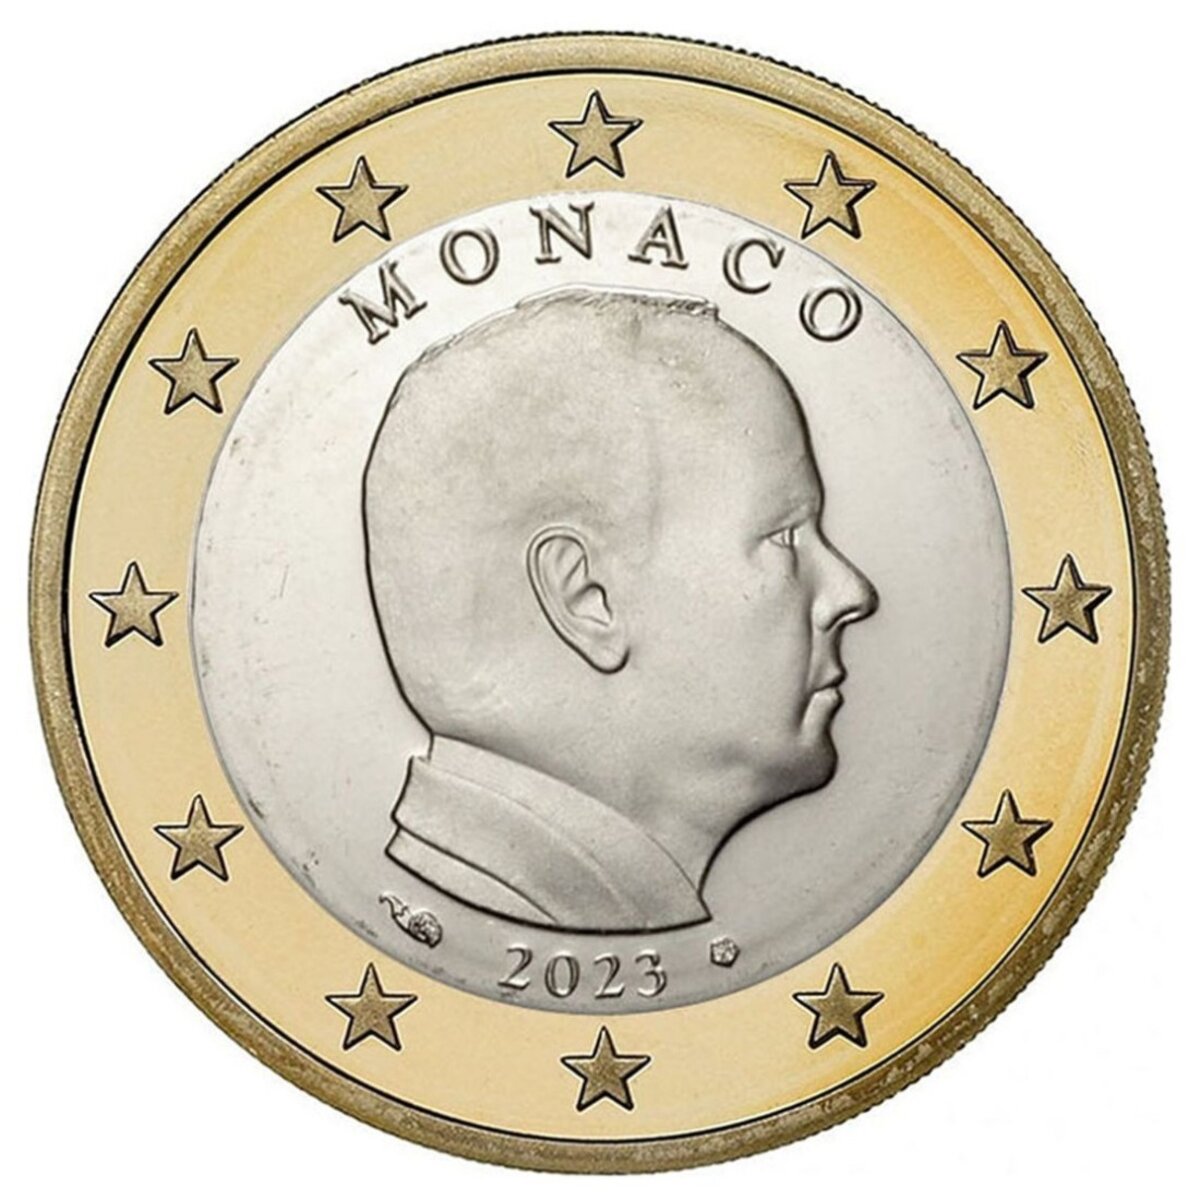 Pièce officielle de 1 euro monaco 2016 UNC Prince Albert II